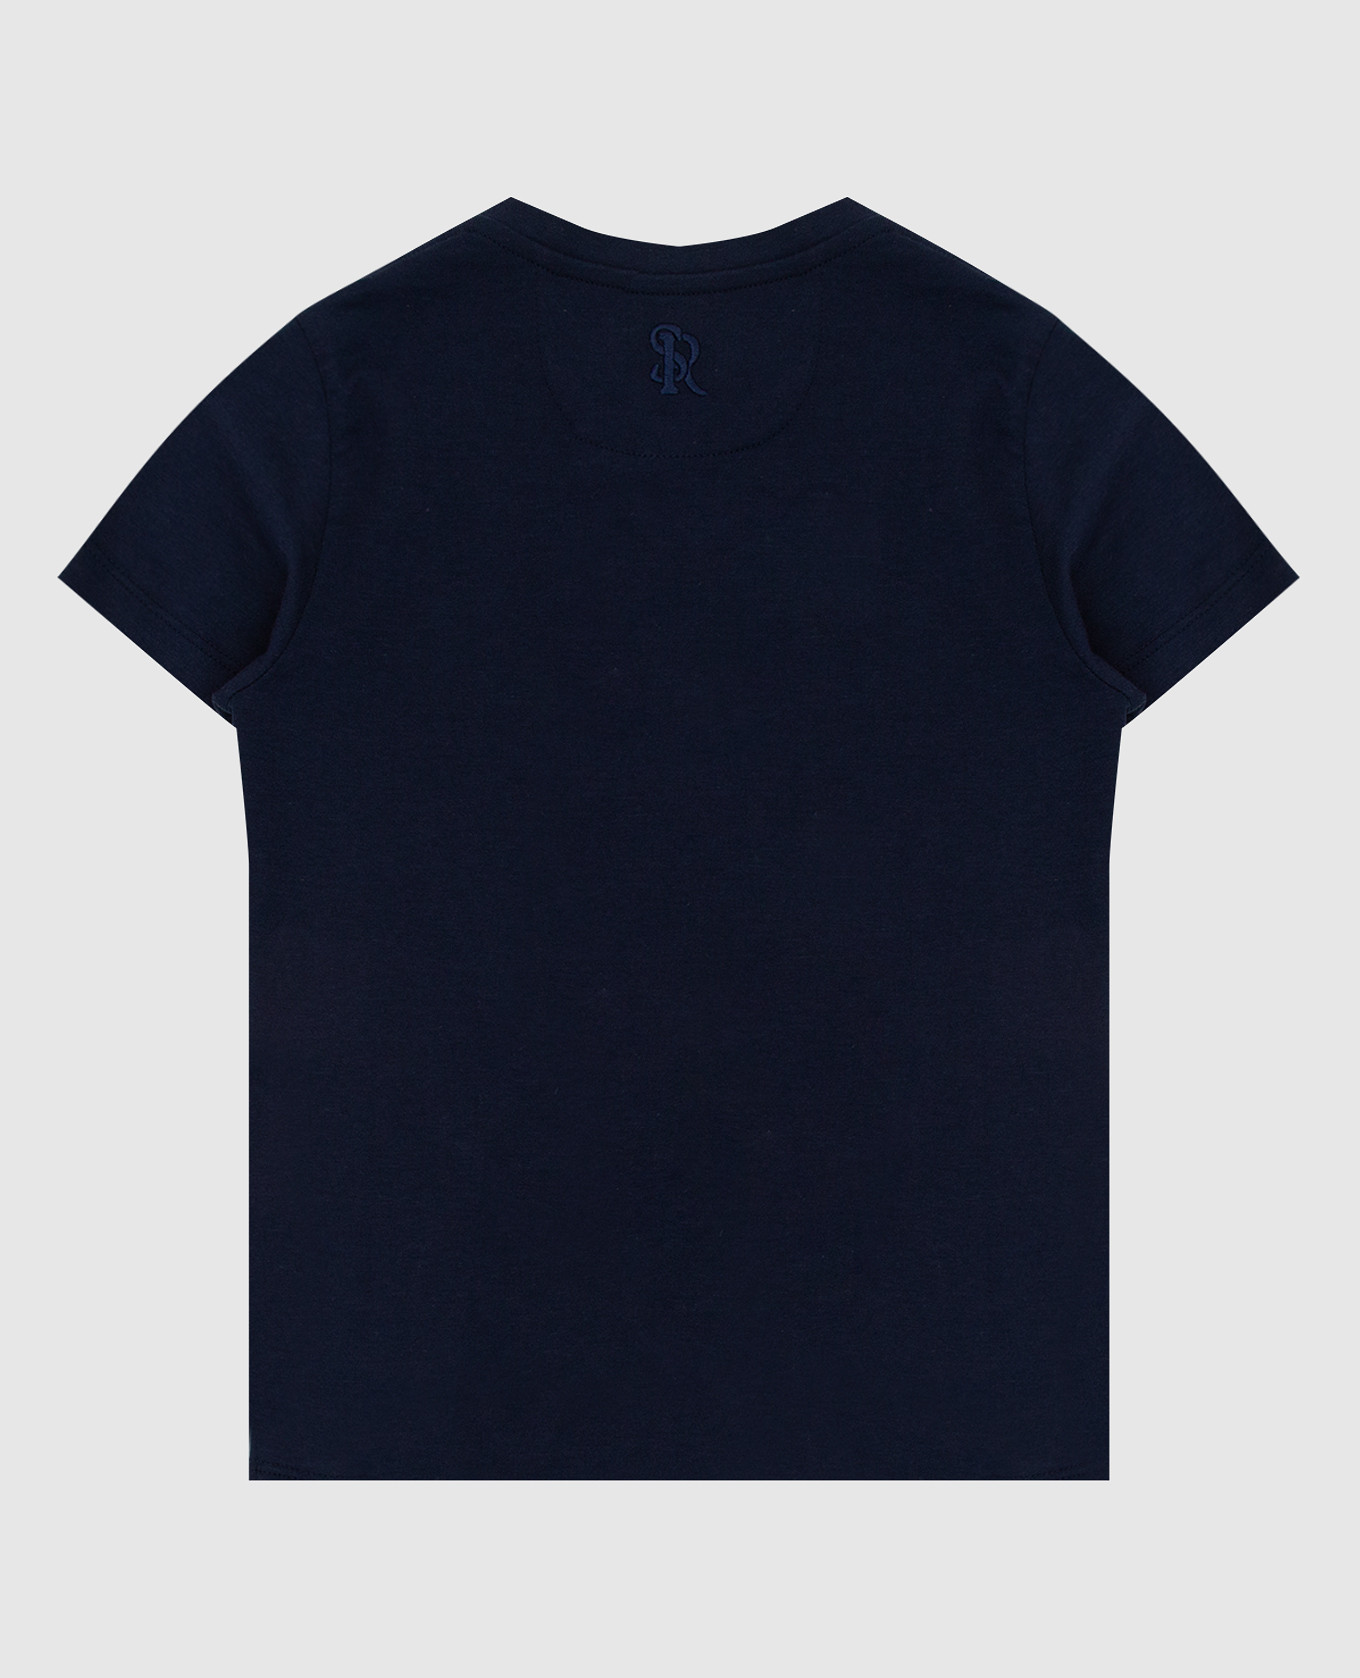 Stefano Ricci Детская темно-синяя футболка с вышивкой YNH8400180803 изображение 2